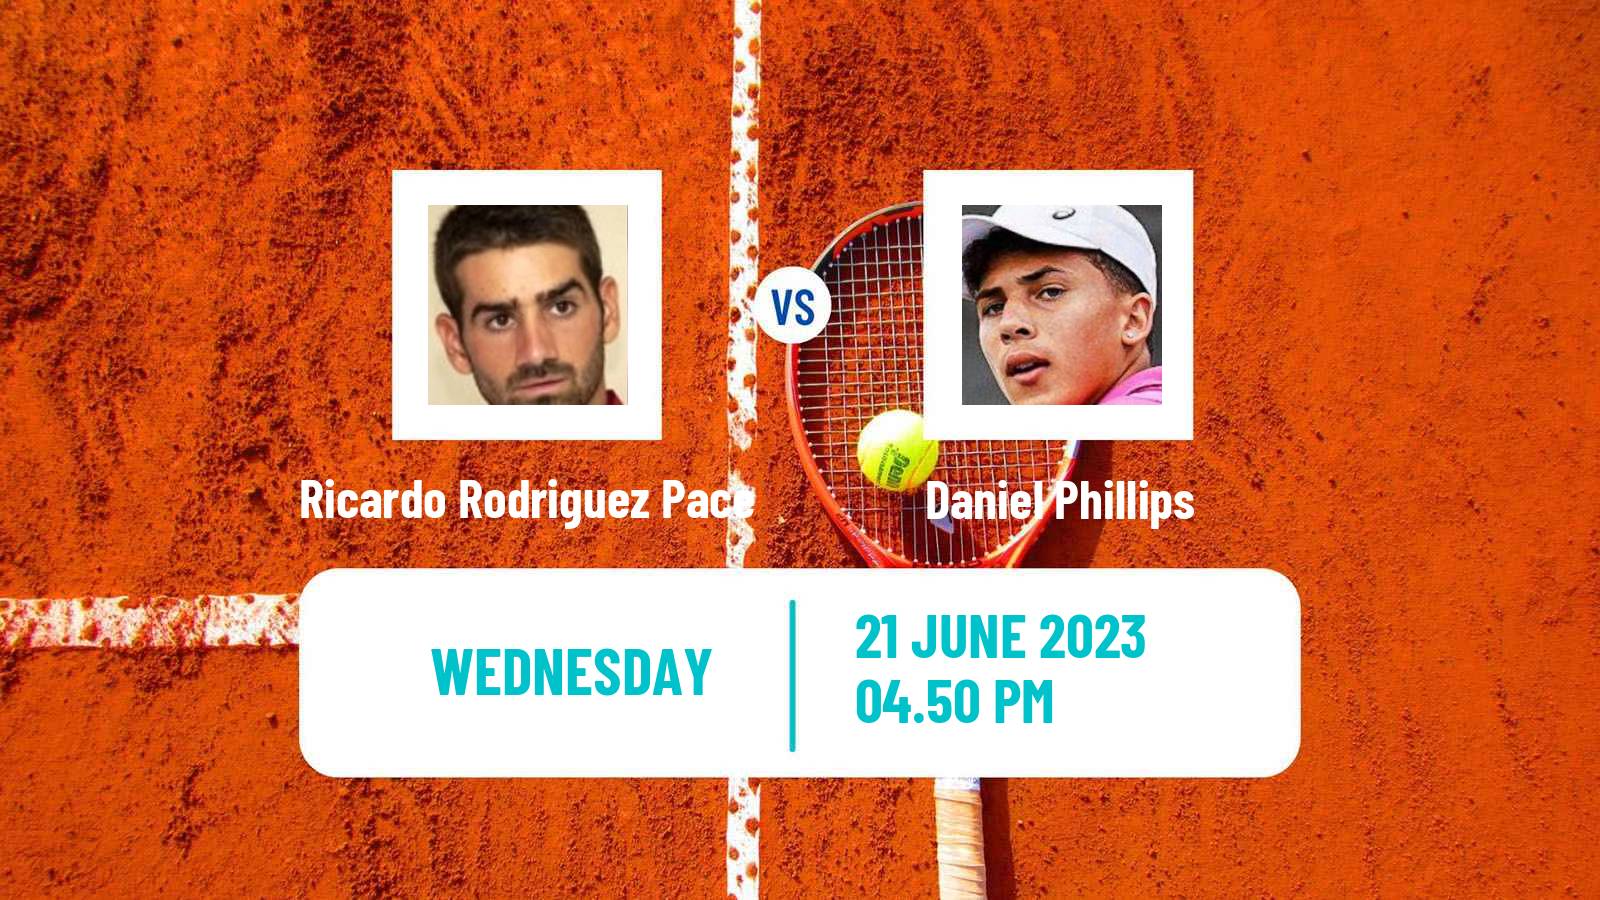 Tennis Davis Cup Group III Ricardo Rodriguez Pace - Daniel Phillips